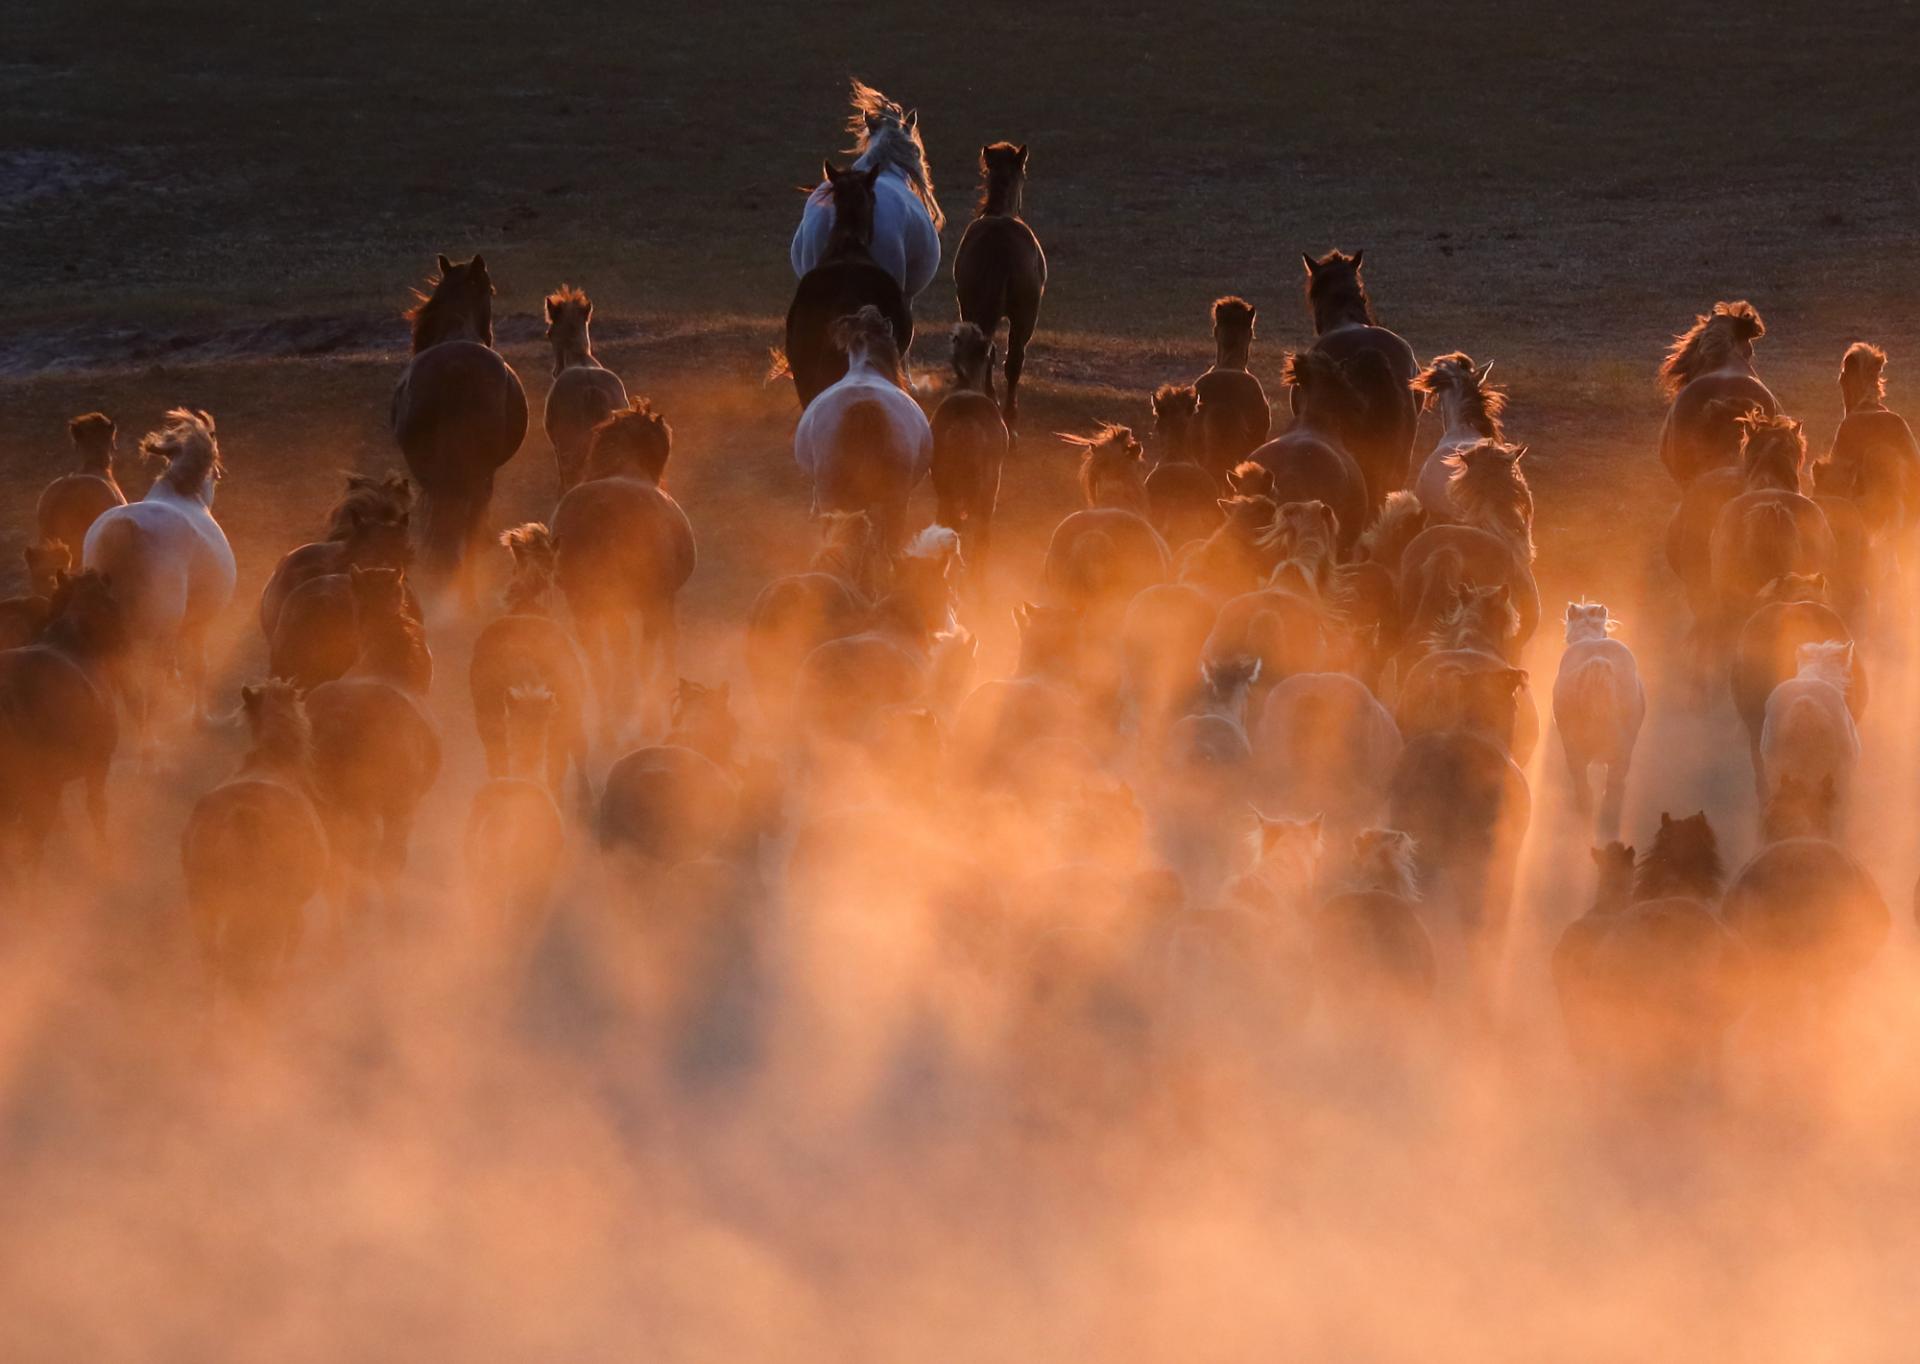 New York Photography Awards Winner - Horse galloping at sunset